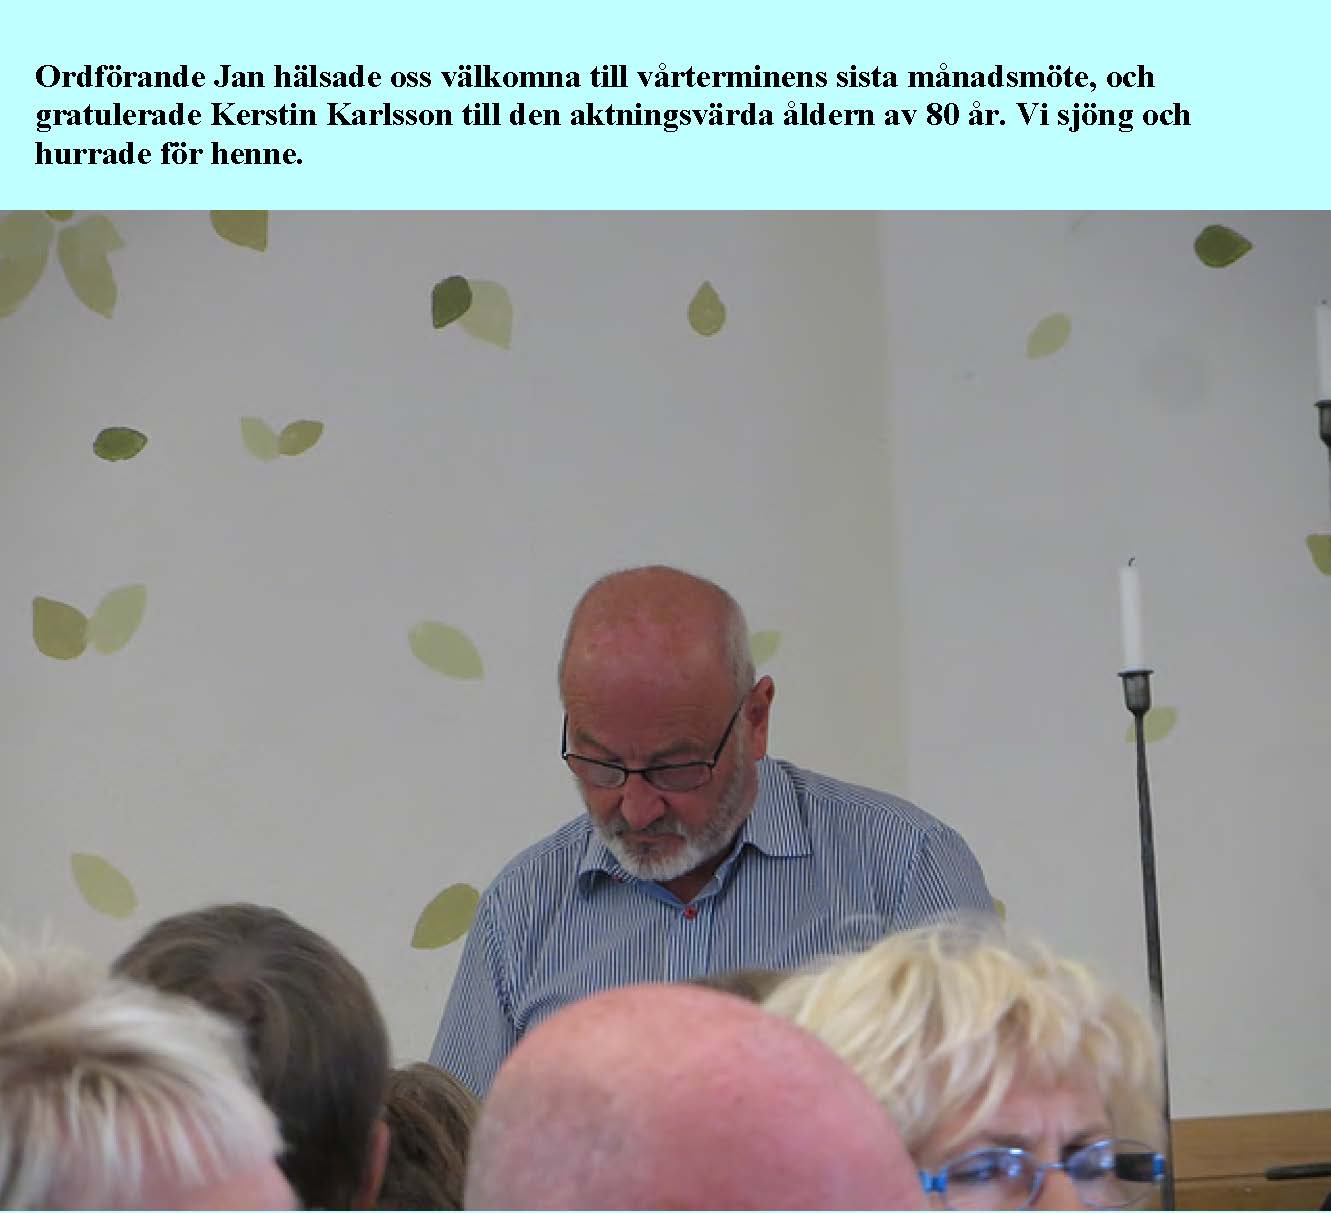 2015-05-08-ove-nyqvist-underhaller_Sida_01.jpg